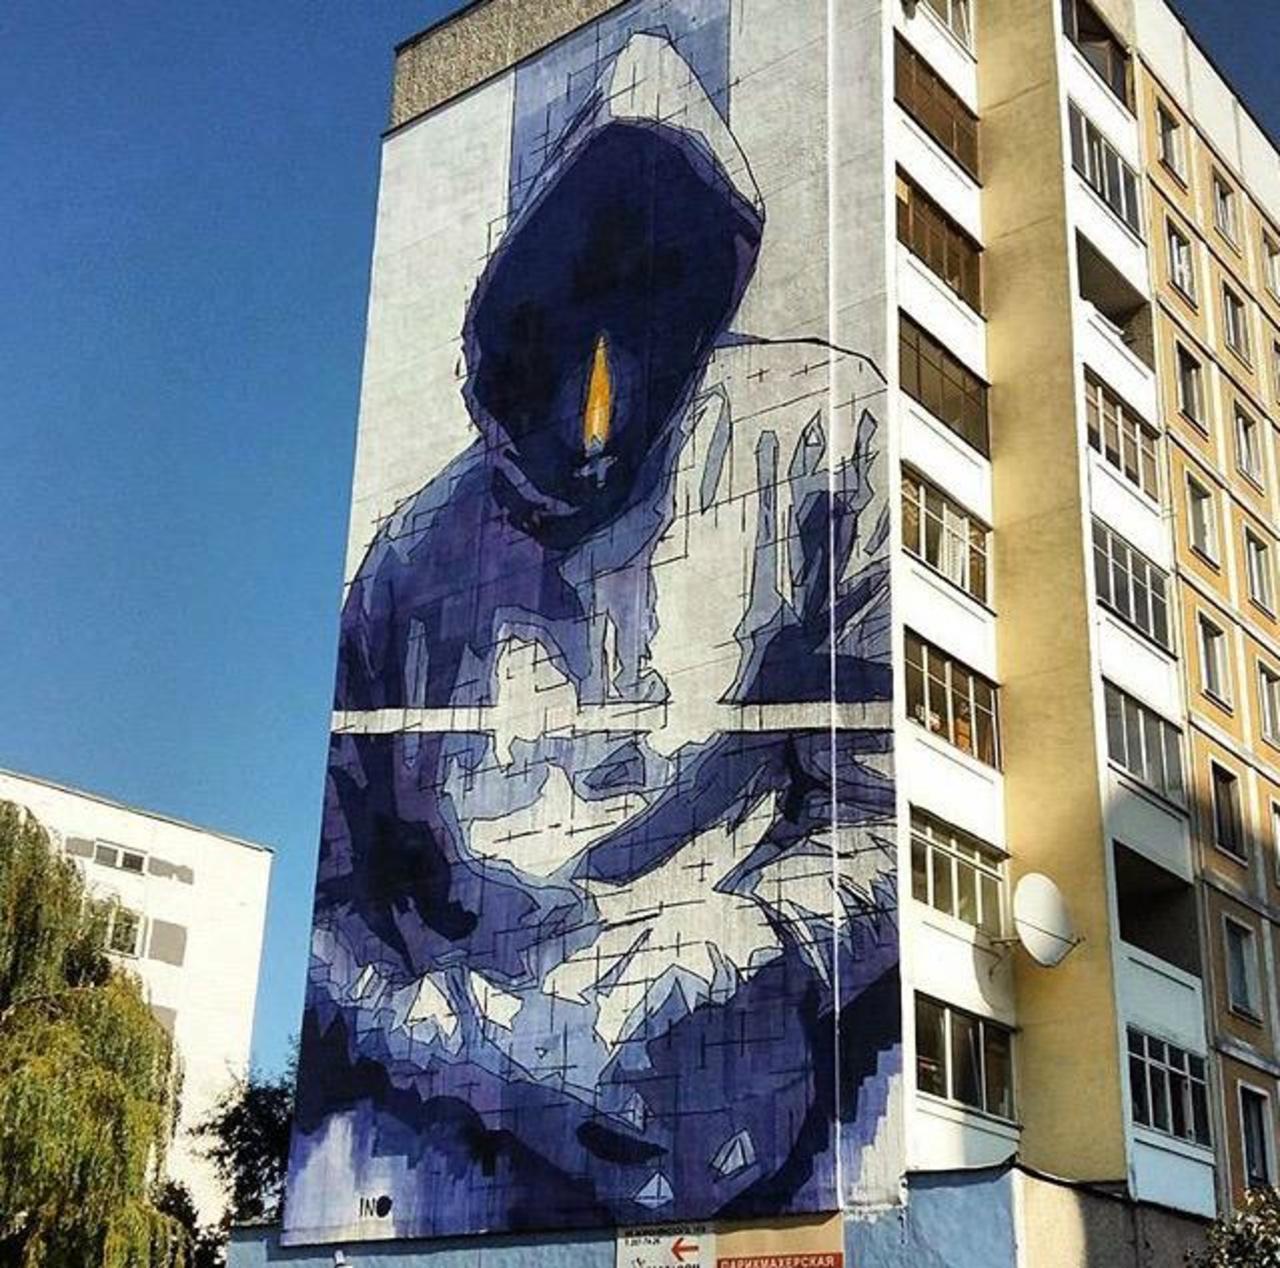 'Man With No Name' 
New Street Art by iNO in Minsk, Belarus 

#art #graffiti #mural #streetart http://t.co/BoeK2EZUGq